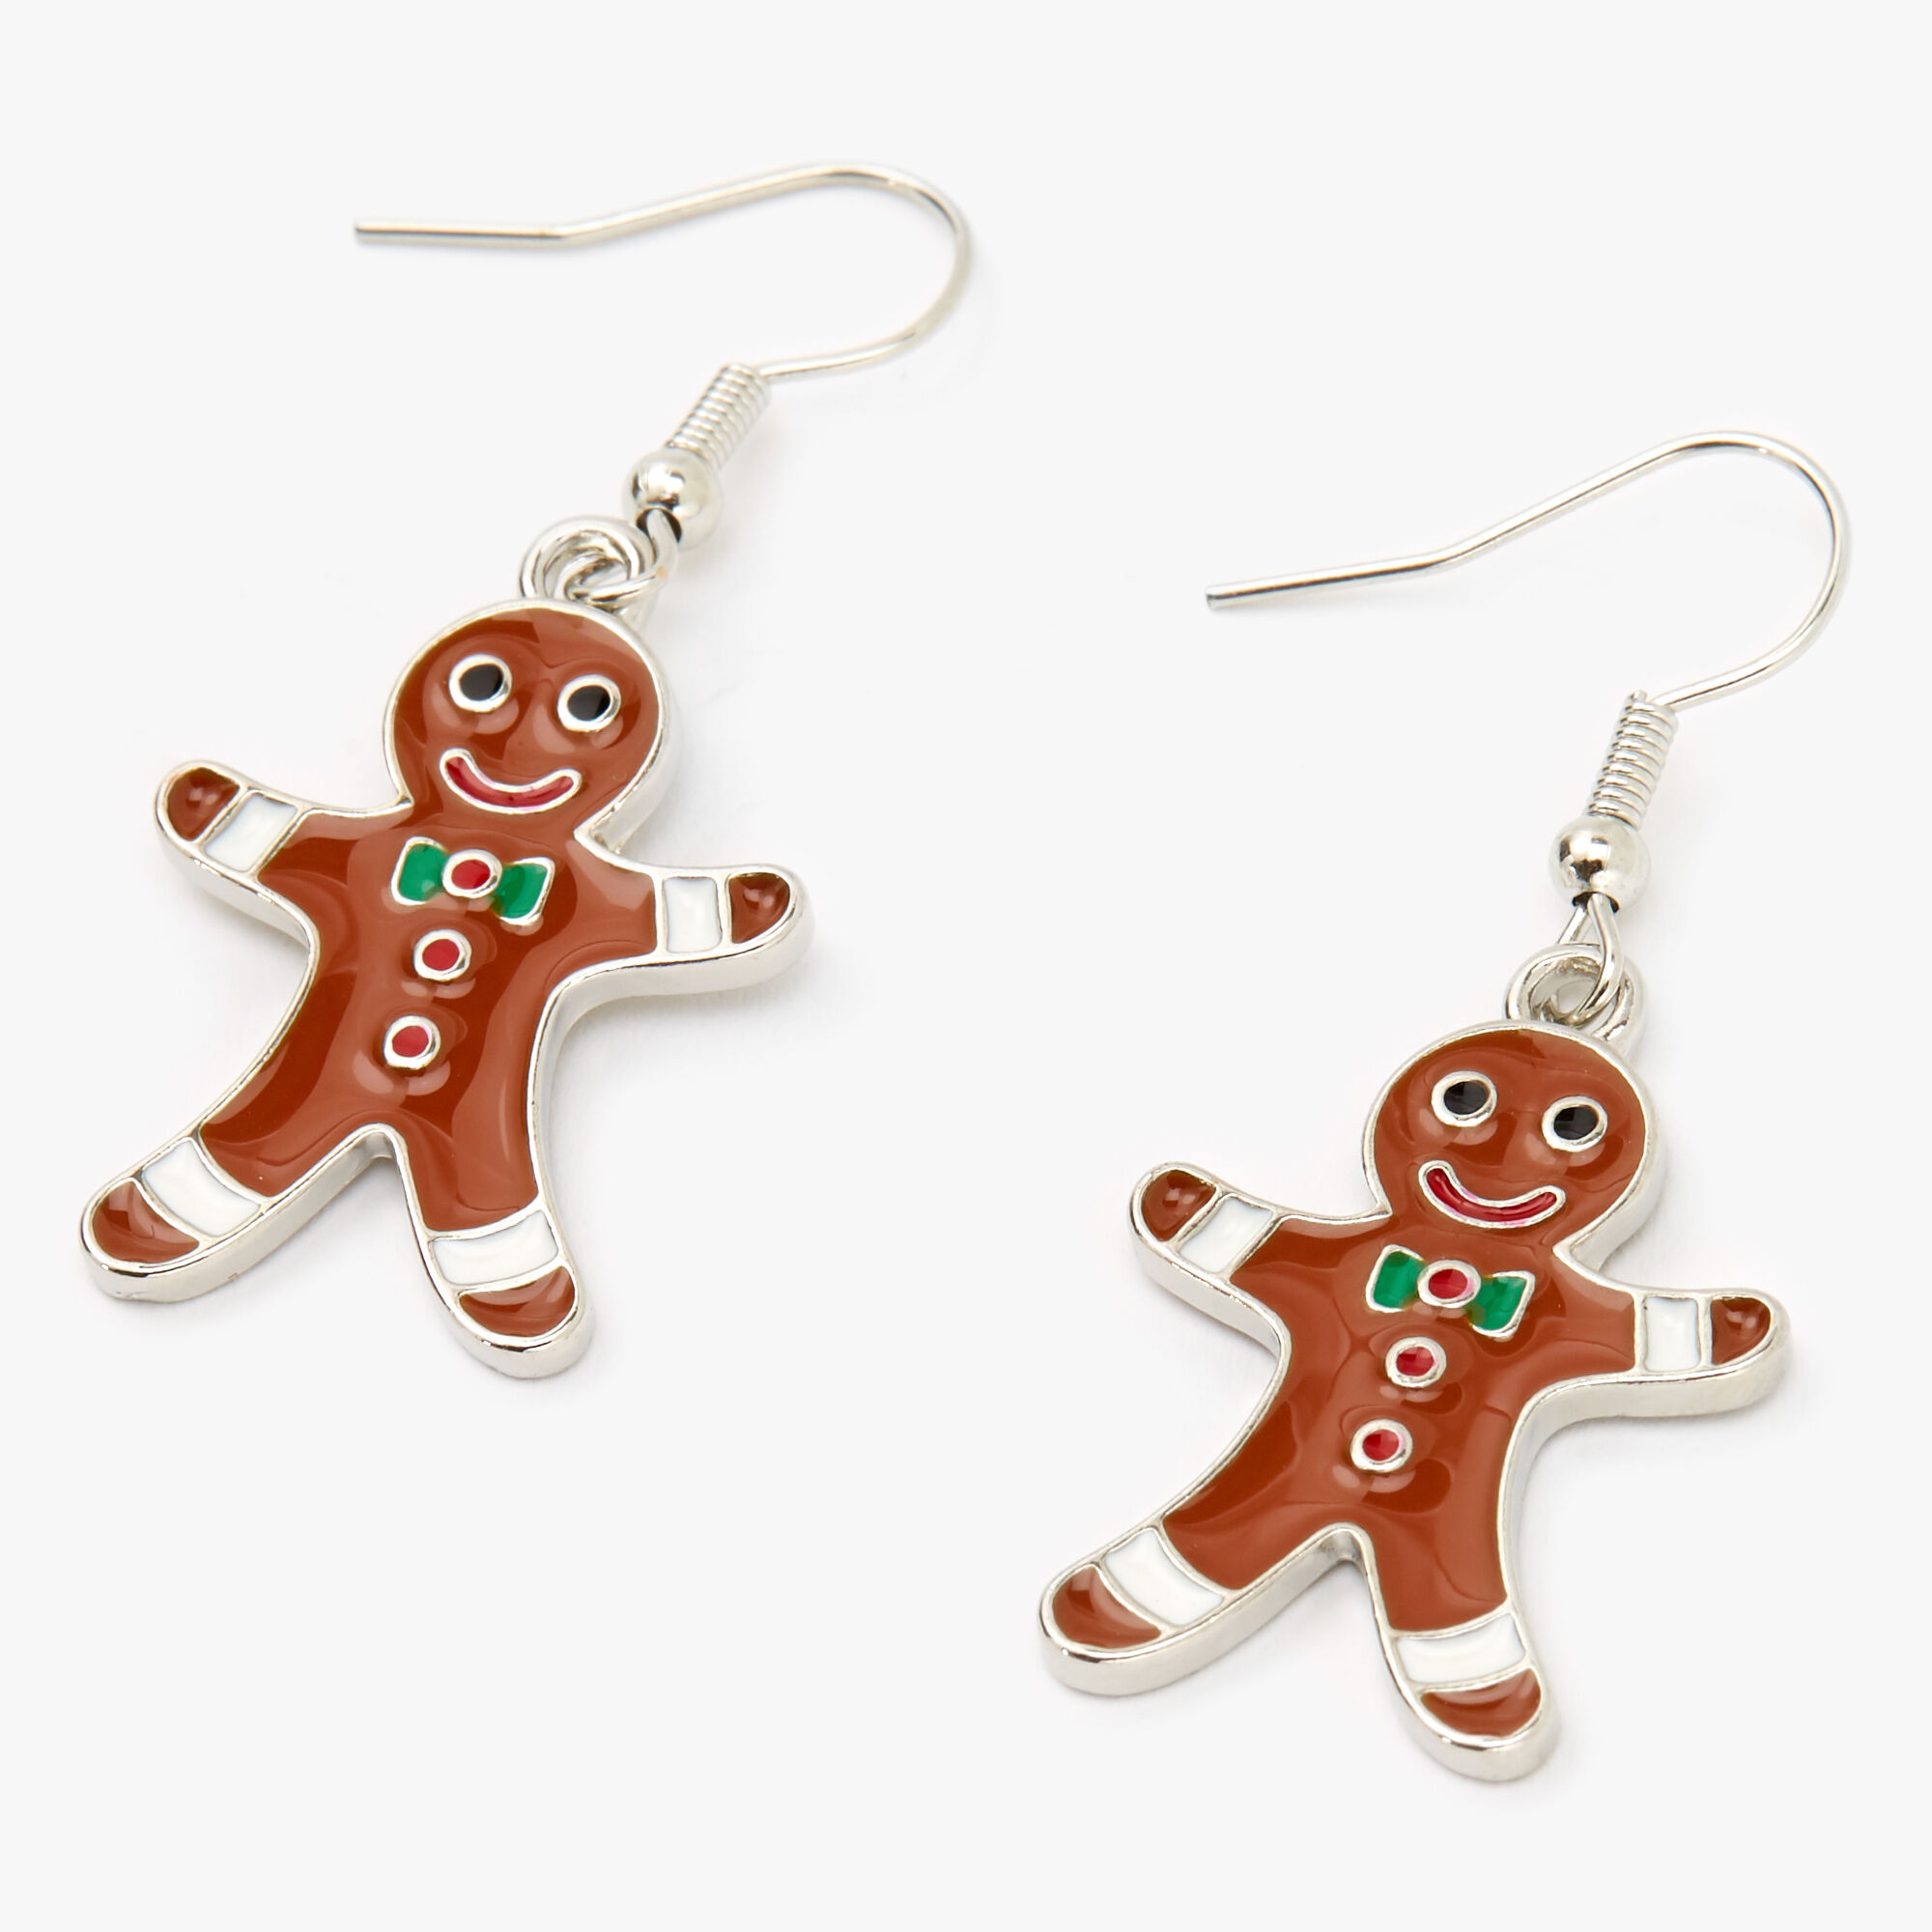 Polymer Clay Earrings- holiday earrings Christmas Earrings Handmade Earrings Gingerbread Sweater Earrings